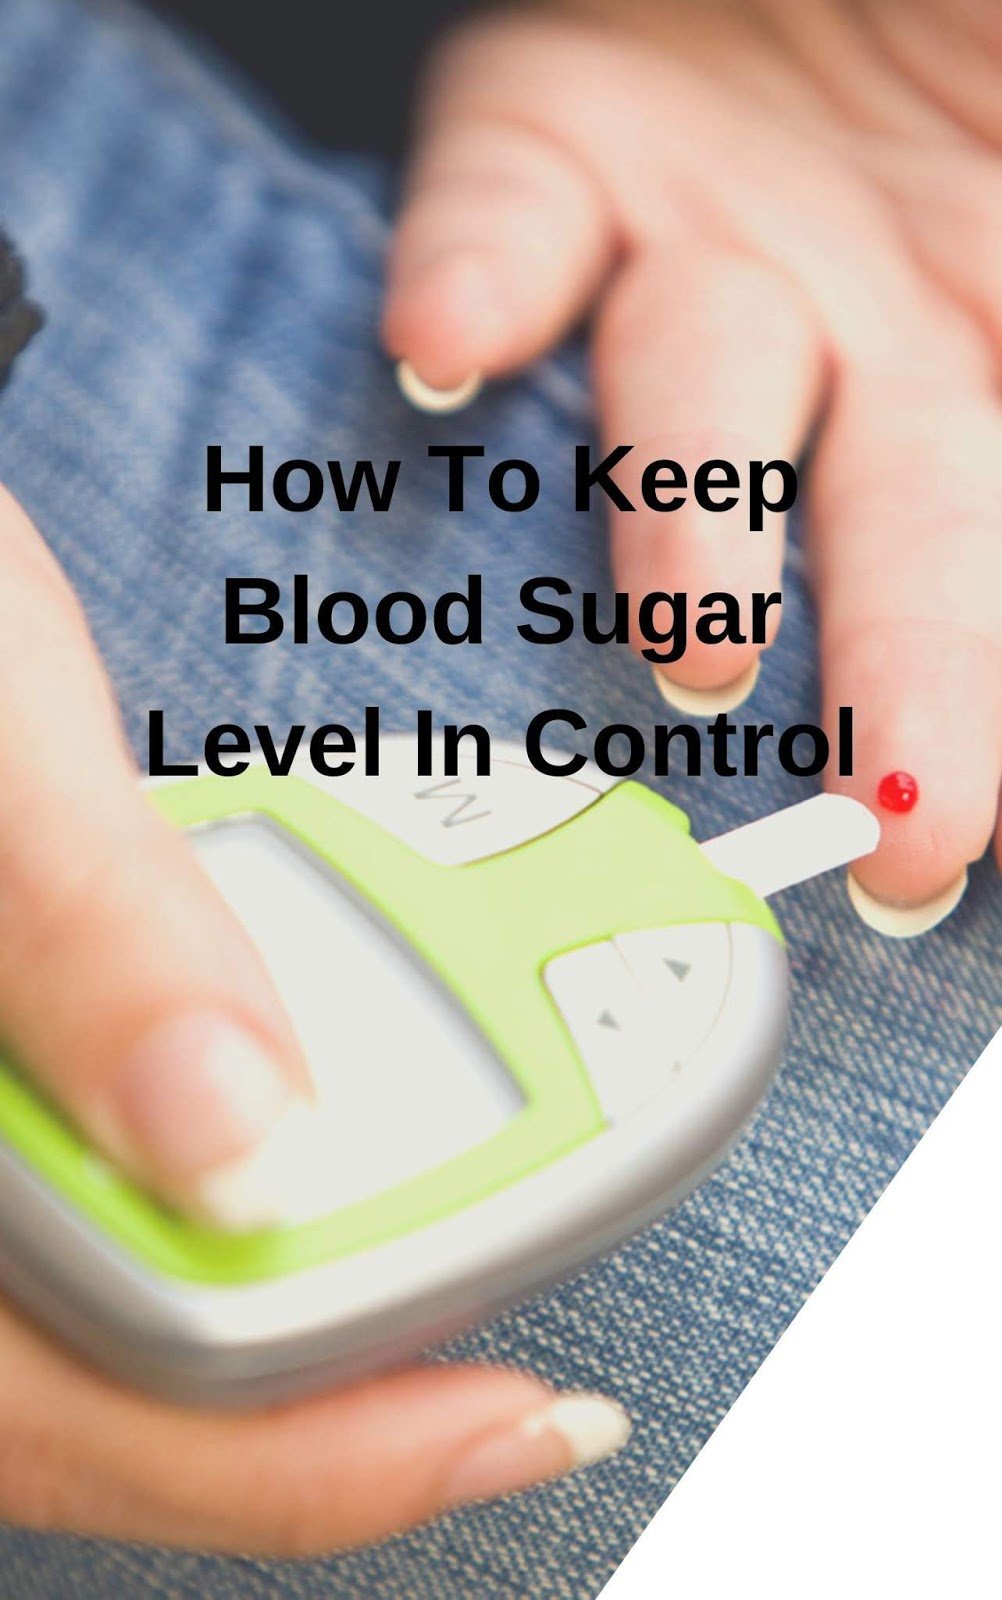 Blood Sugar Symptoms: How to keep blood sugar level in control